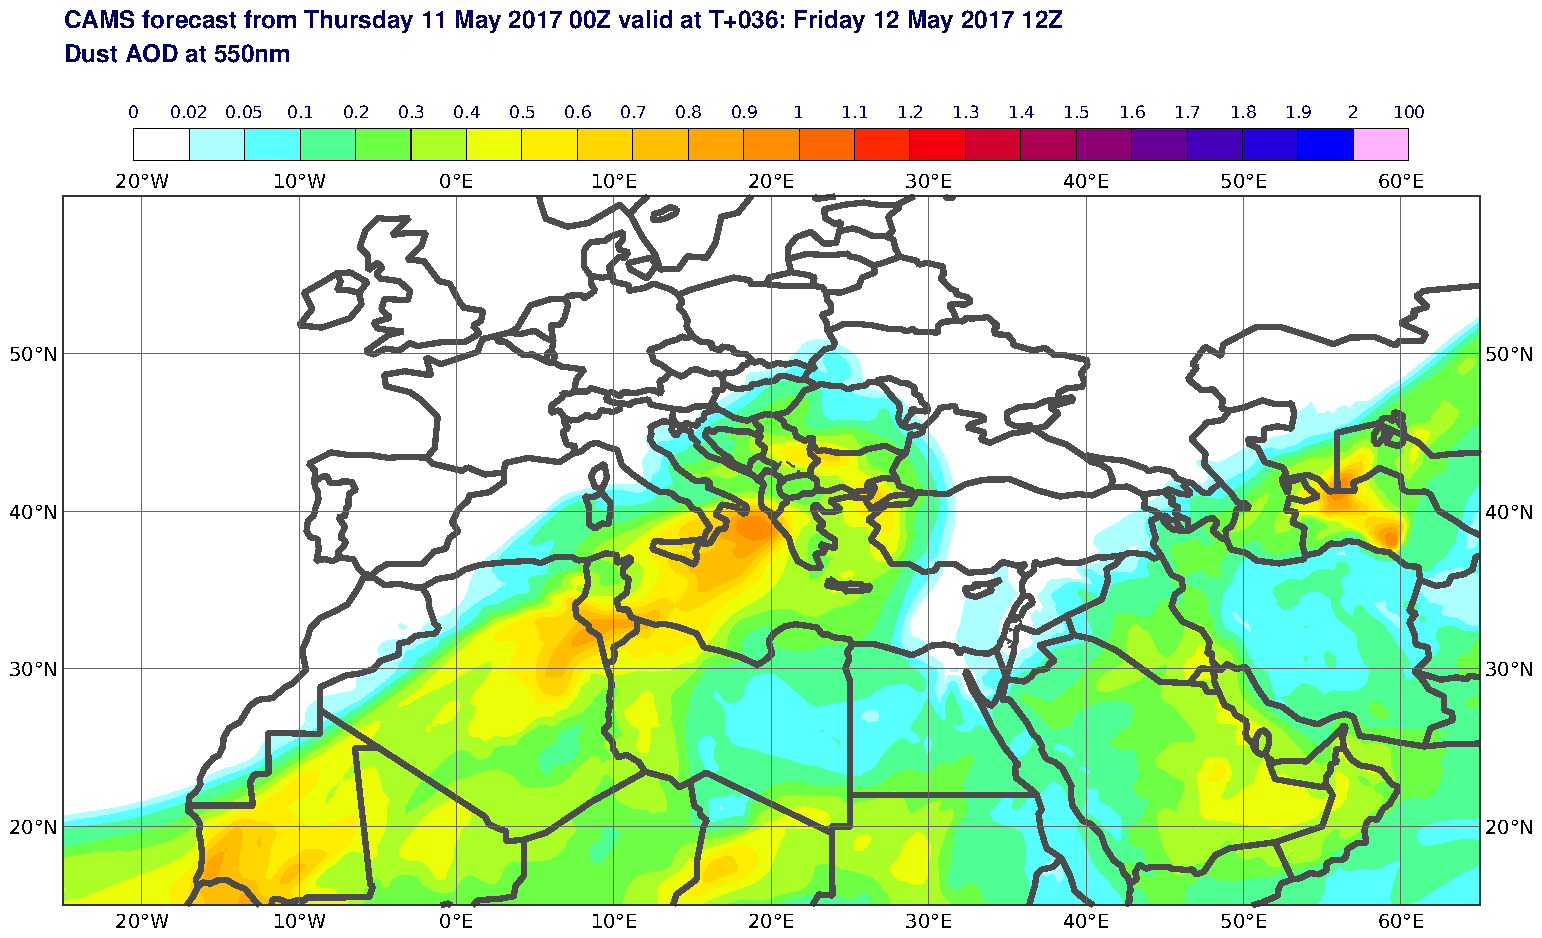 Dust AOD at 550nm valid at T36 - 2017-05-12 12:00